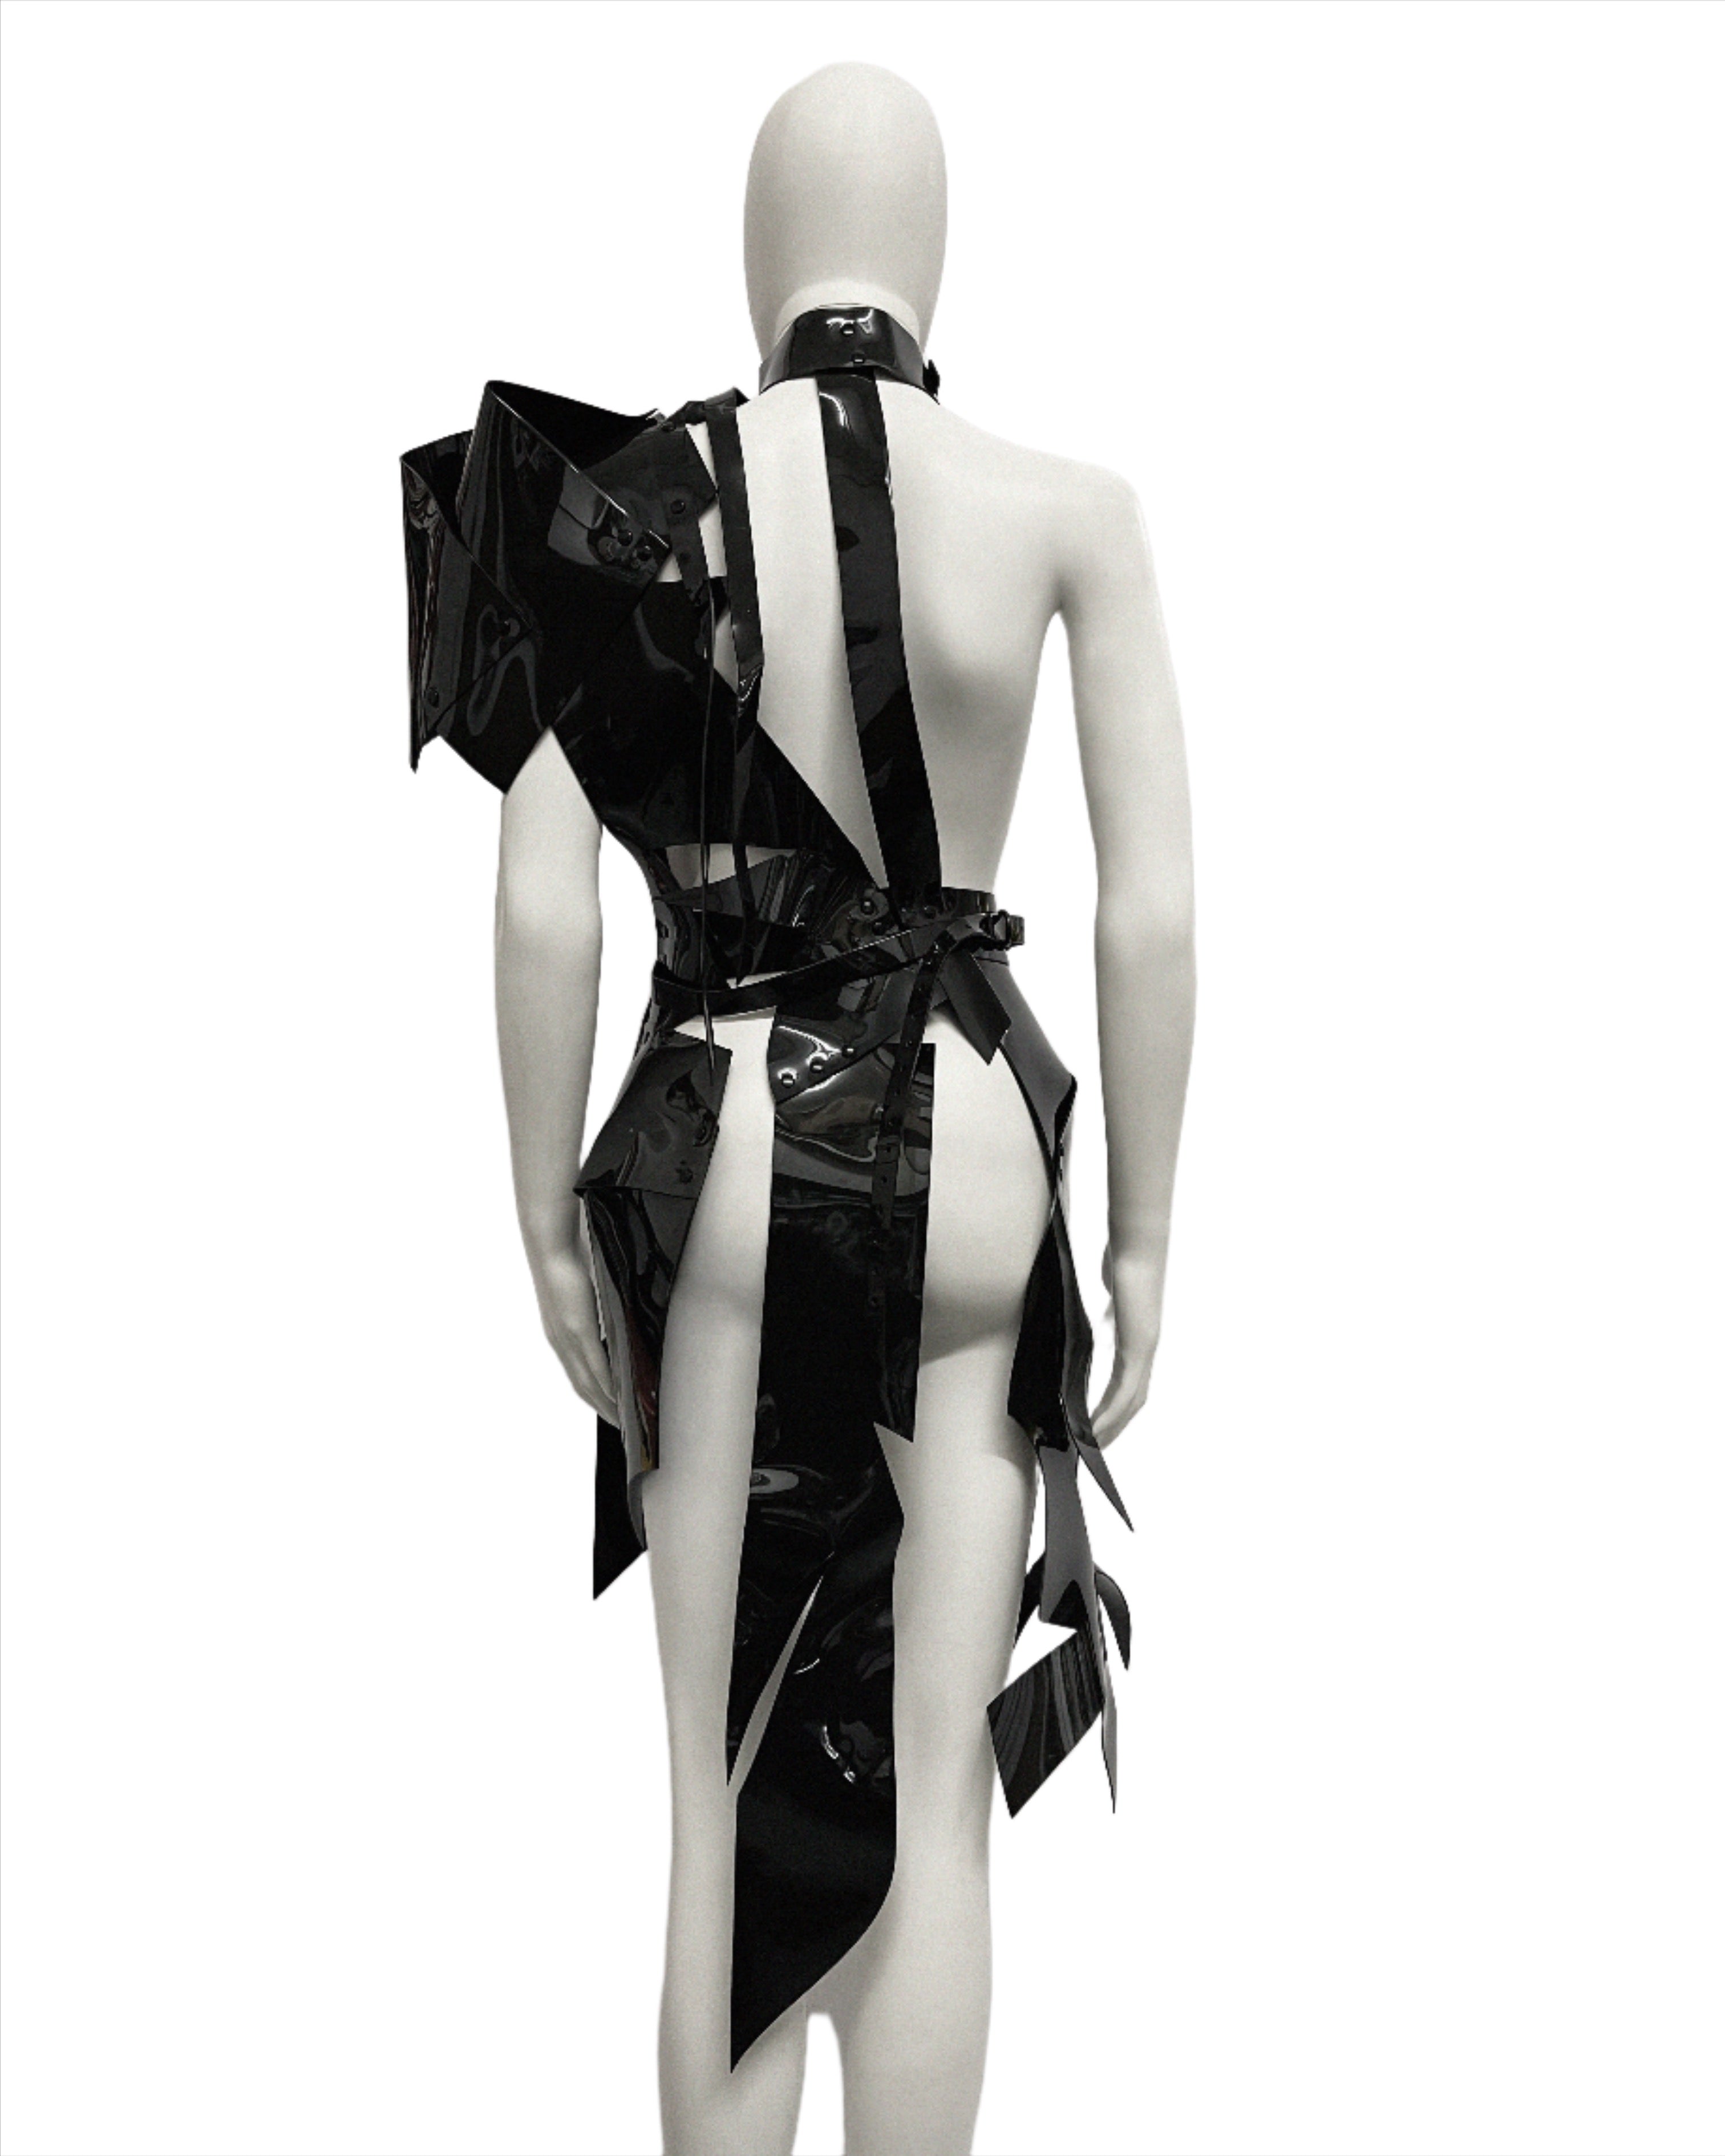 Jivomir Domoustchiev sculpture half dress superhero cosplay luxury future design love modernity vegan couture